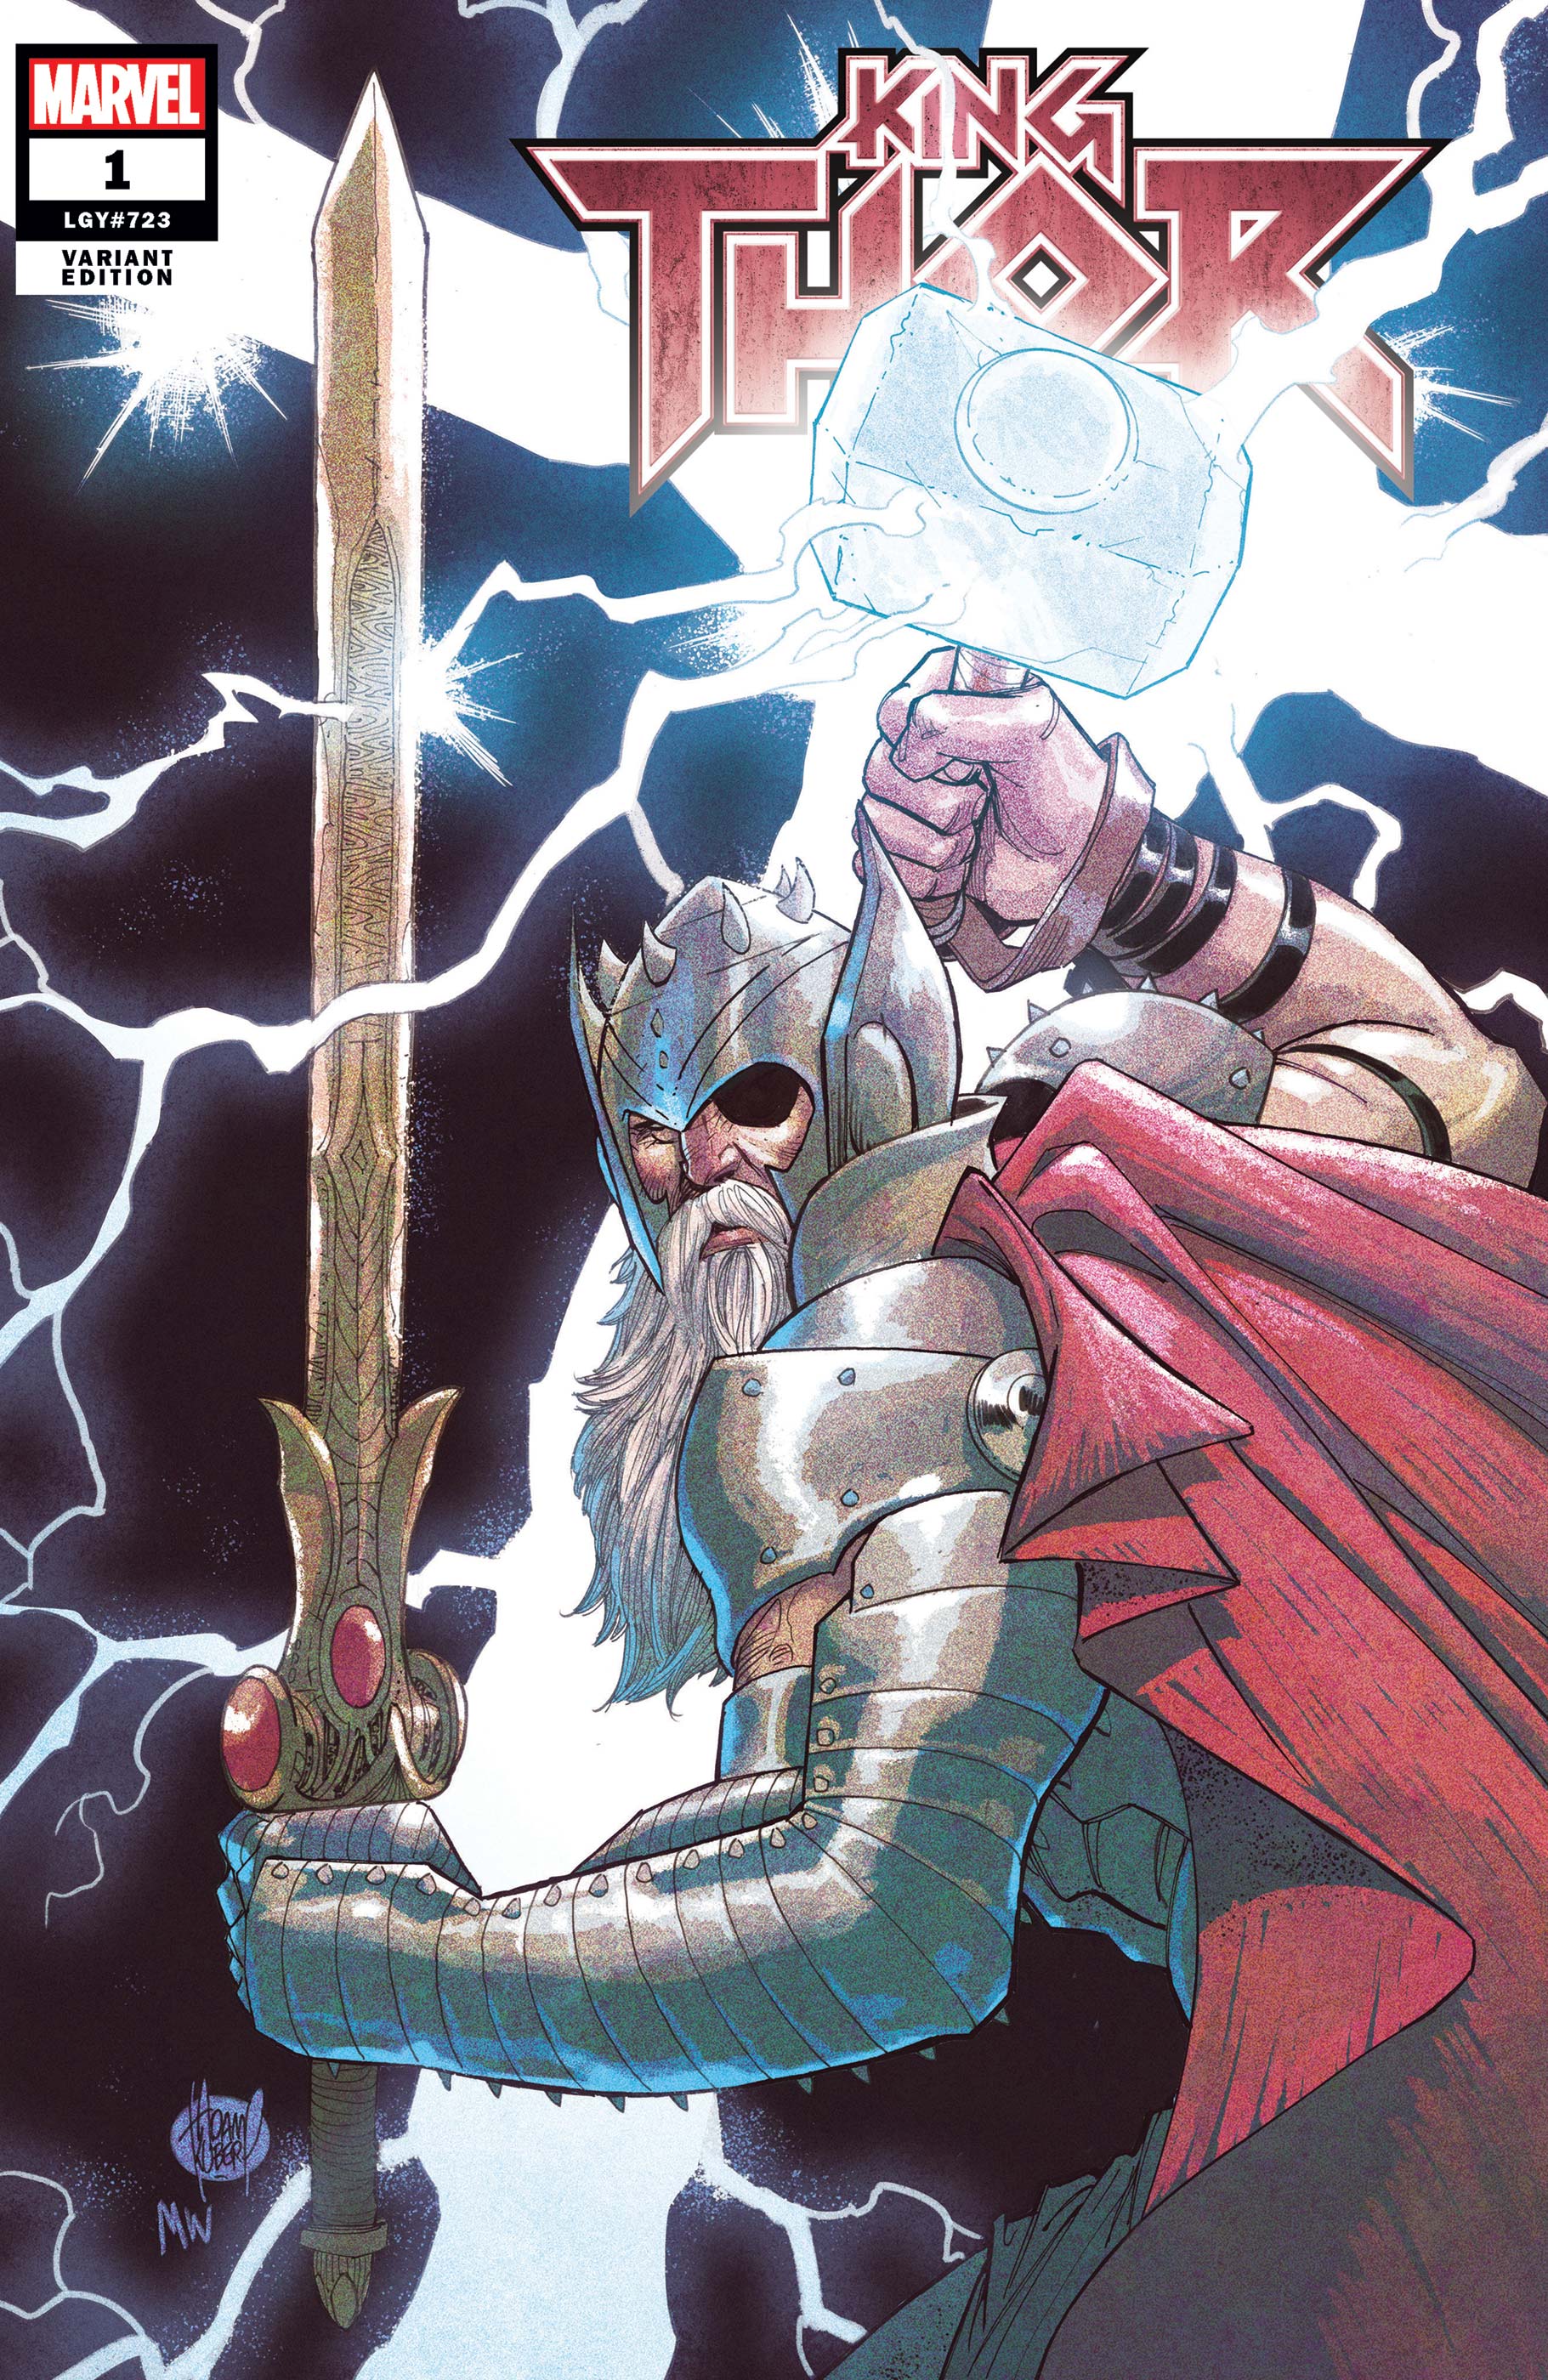 King Thor (2019) #1 (Variant)